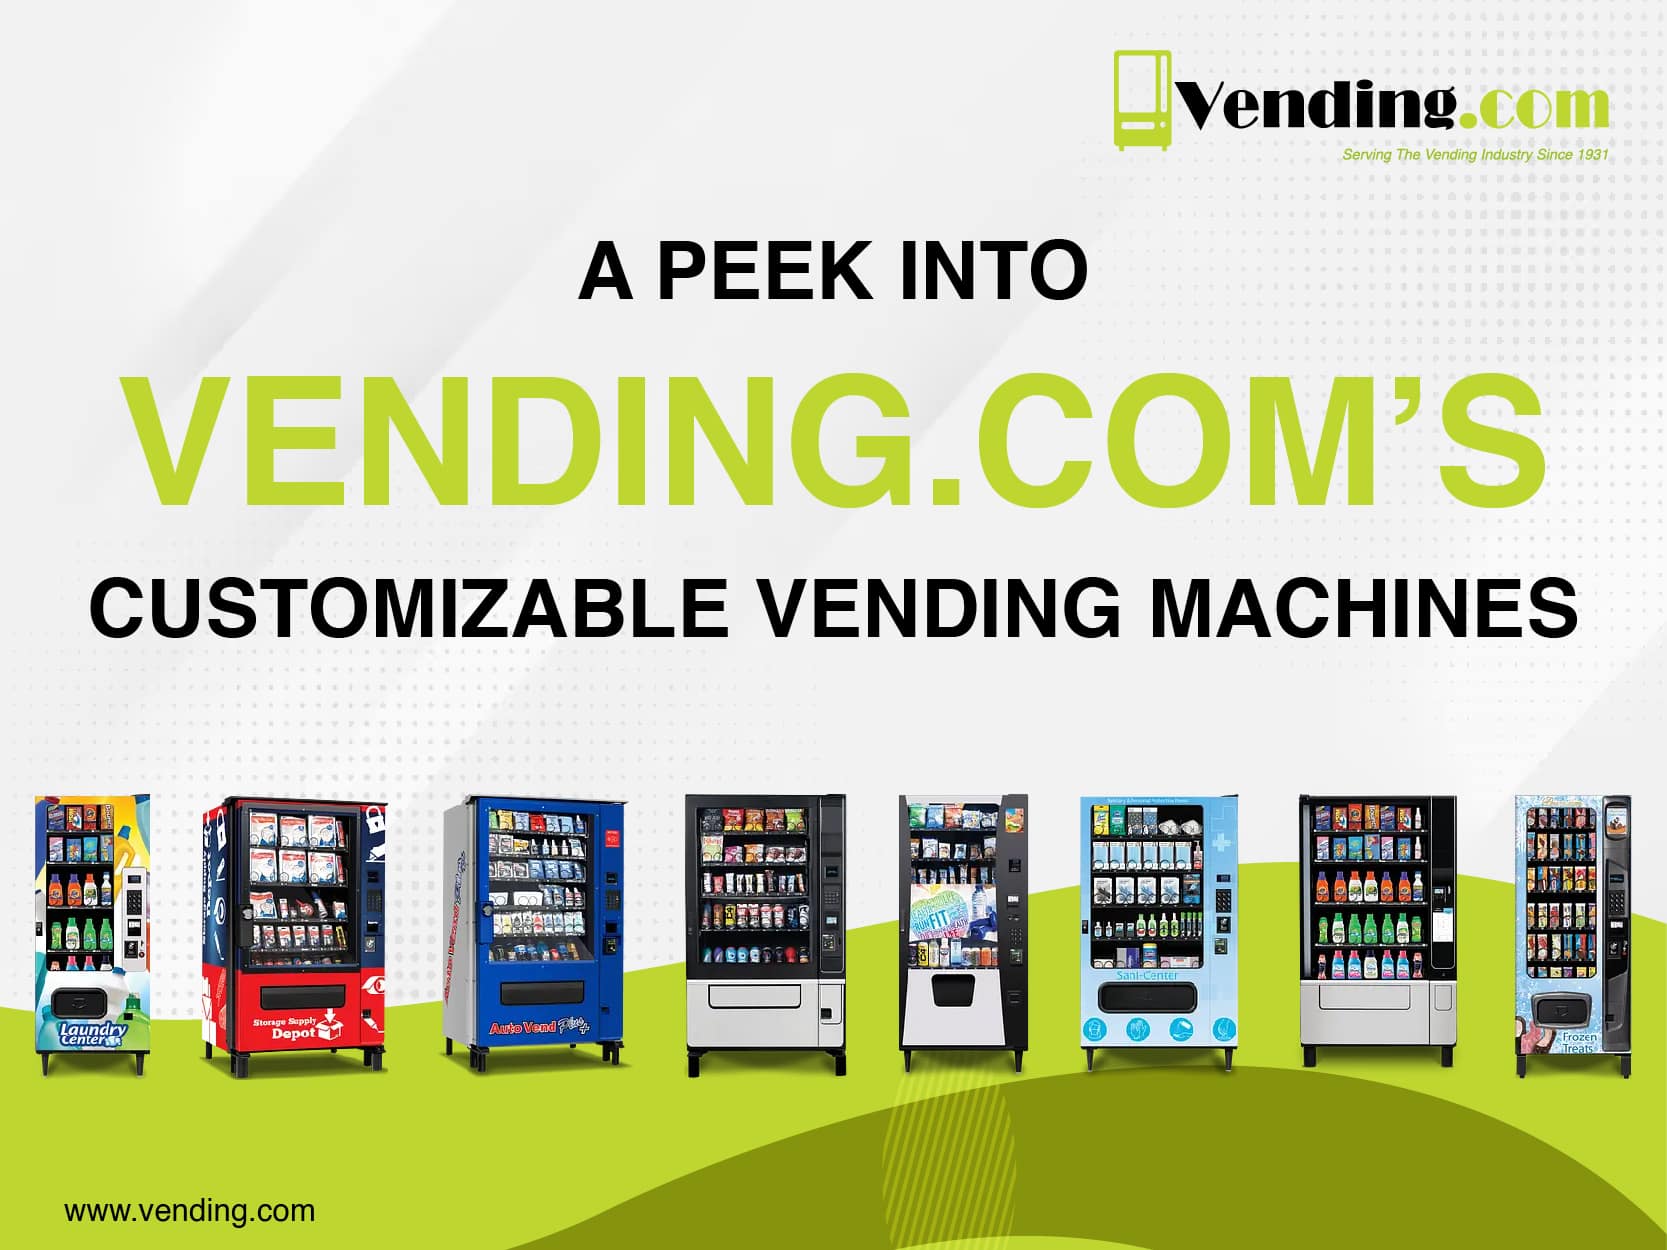 Customized Vending Machines - Vending.com